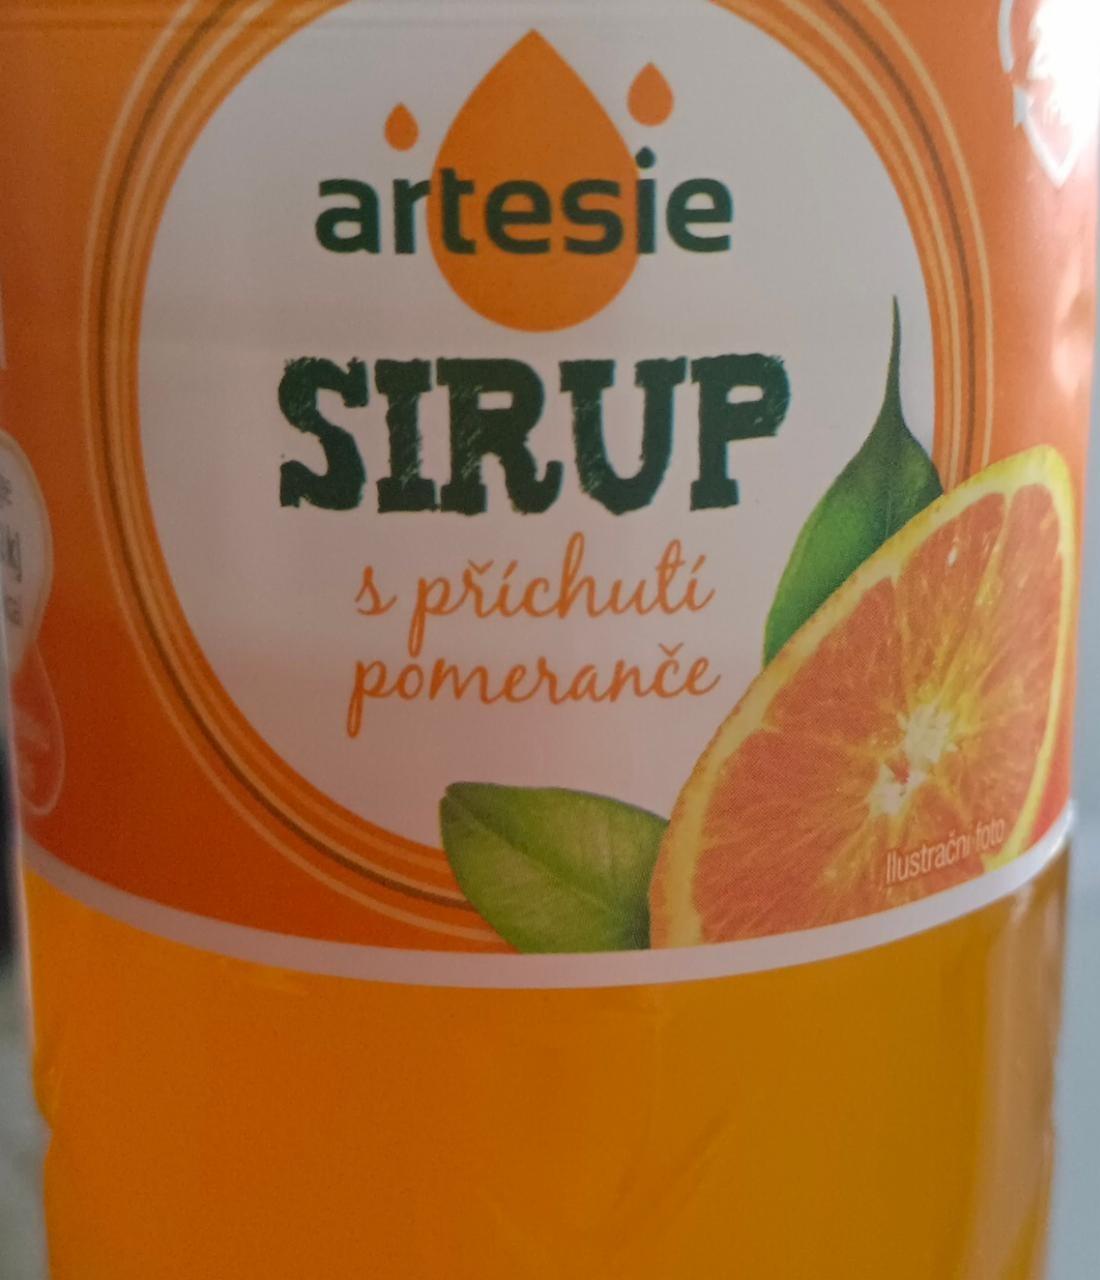 Fotografie - sirup pomeranč artesie